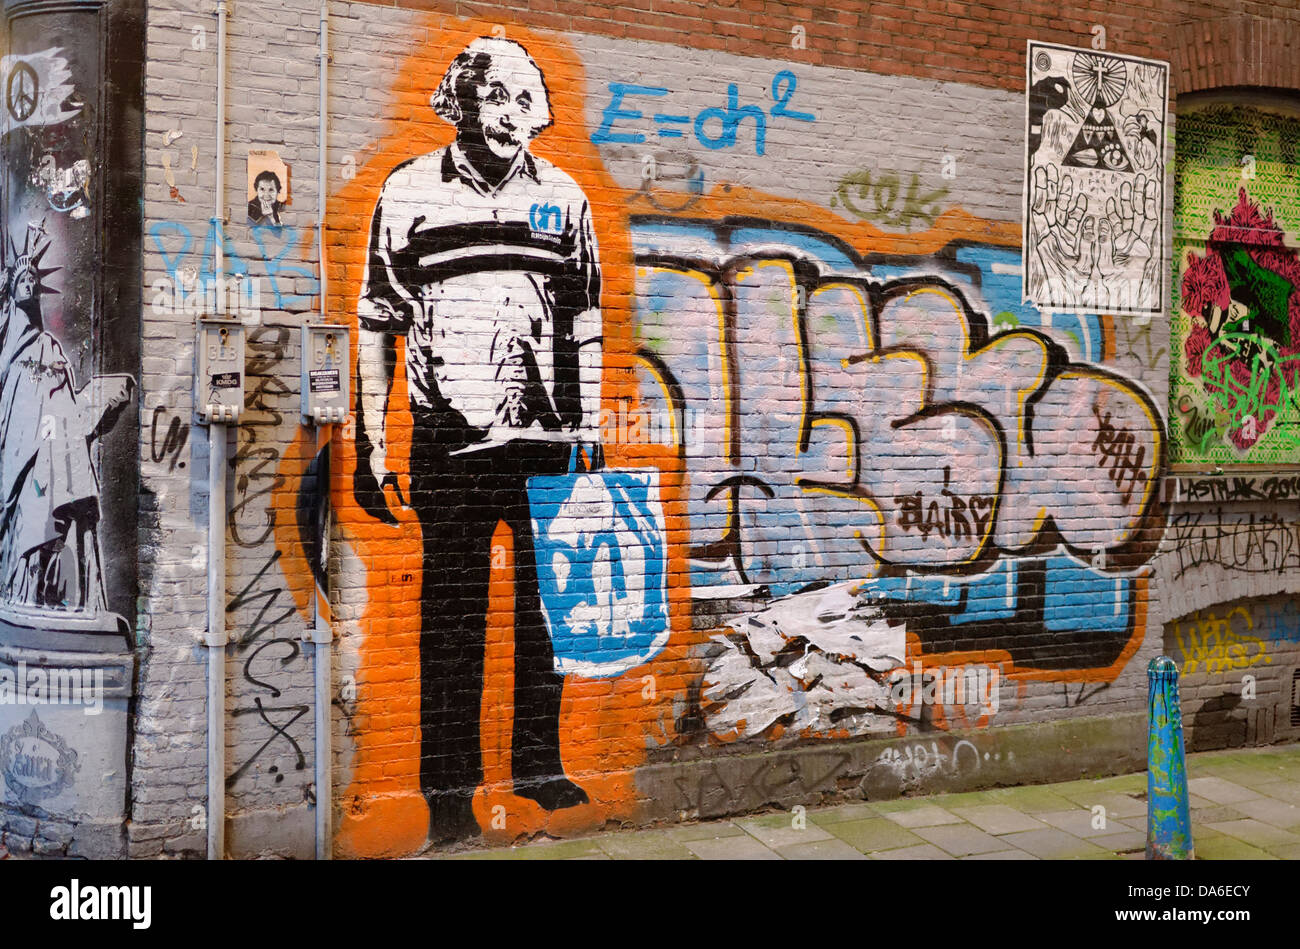 Street art or urban decay and vandalism, graffiti in Amsterdam, Holland, the Netherlands. Einstein shopping bag football shirt Stock Photo